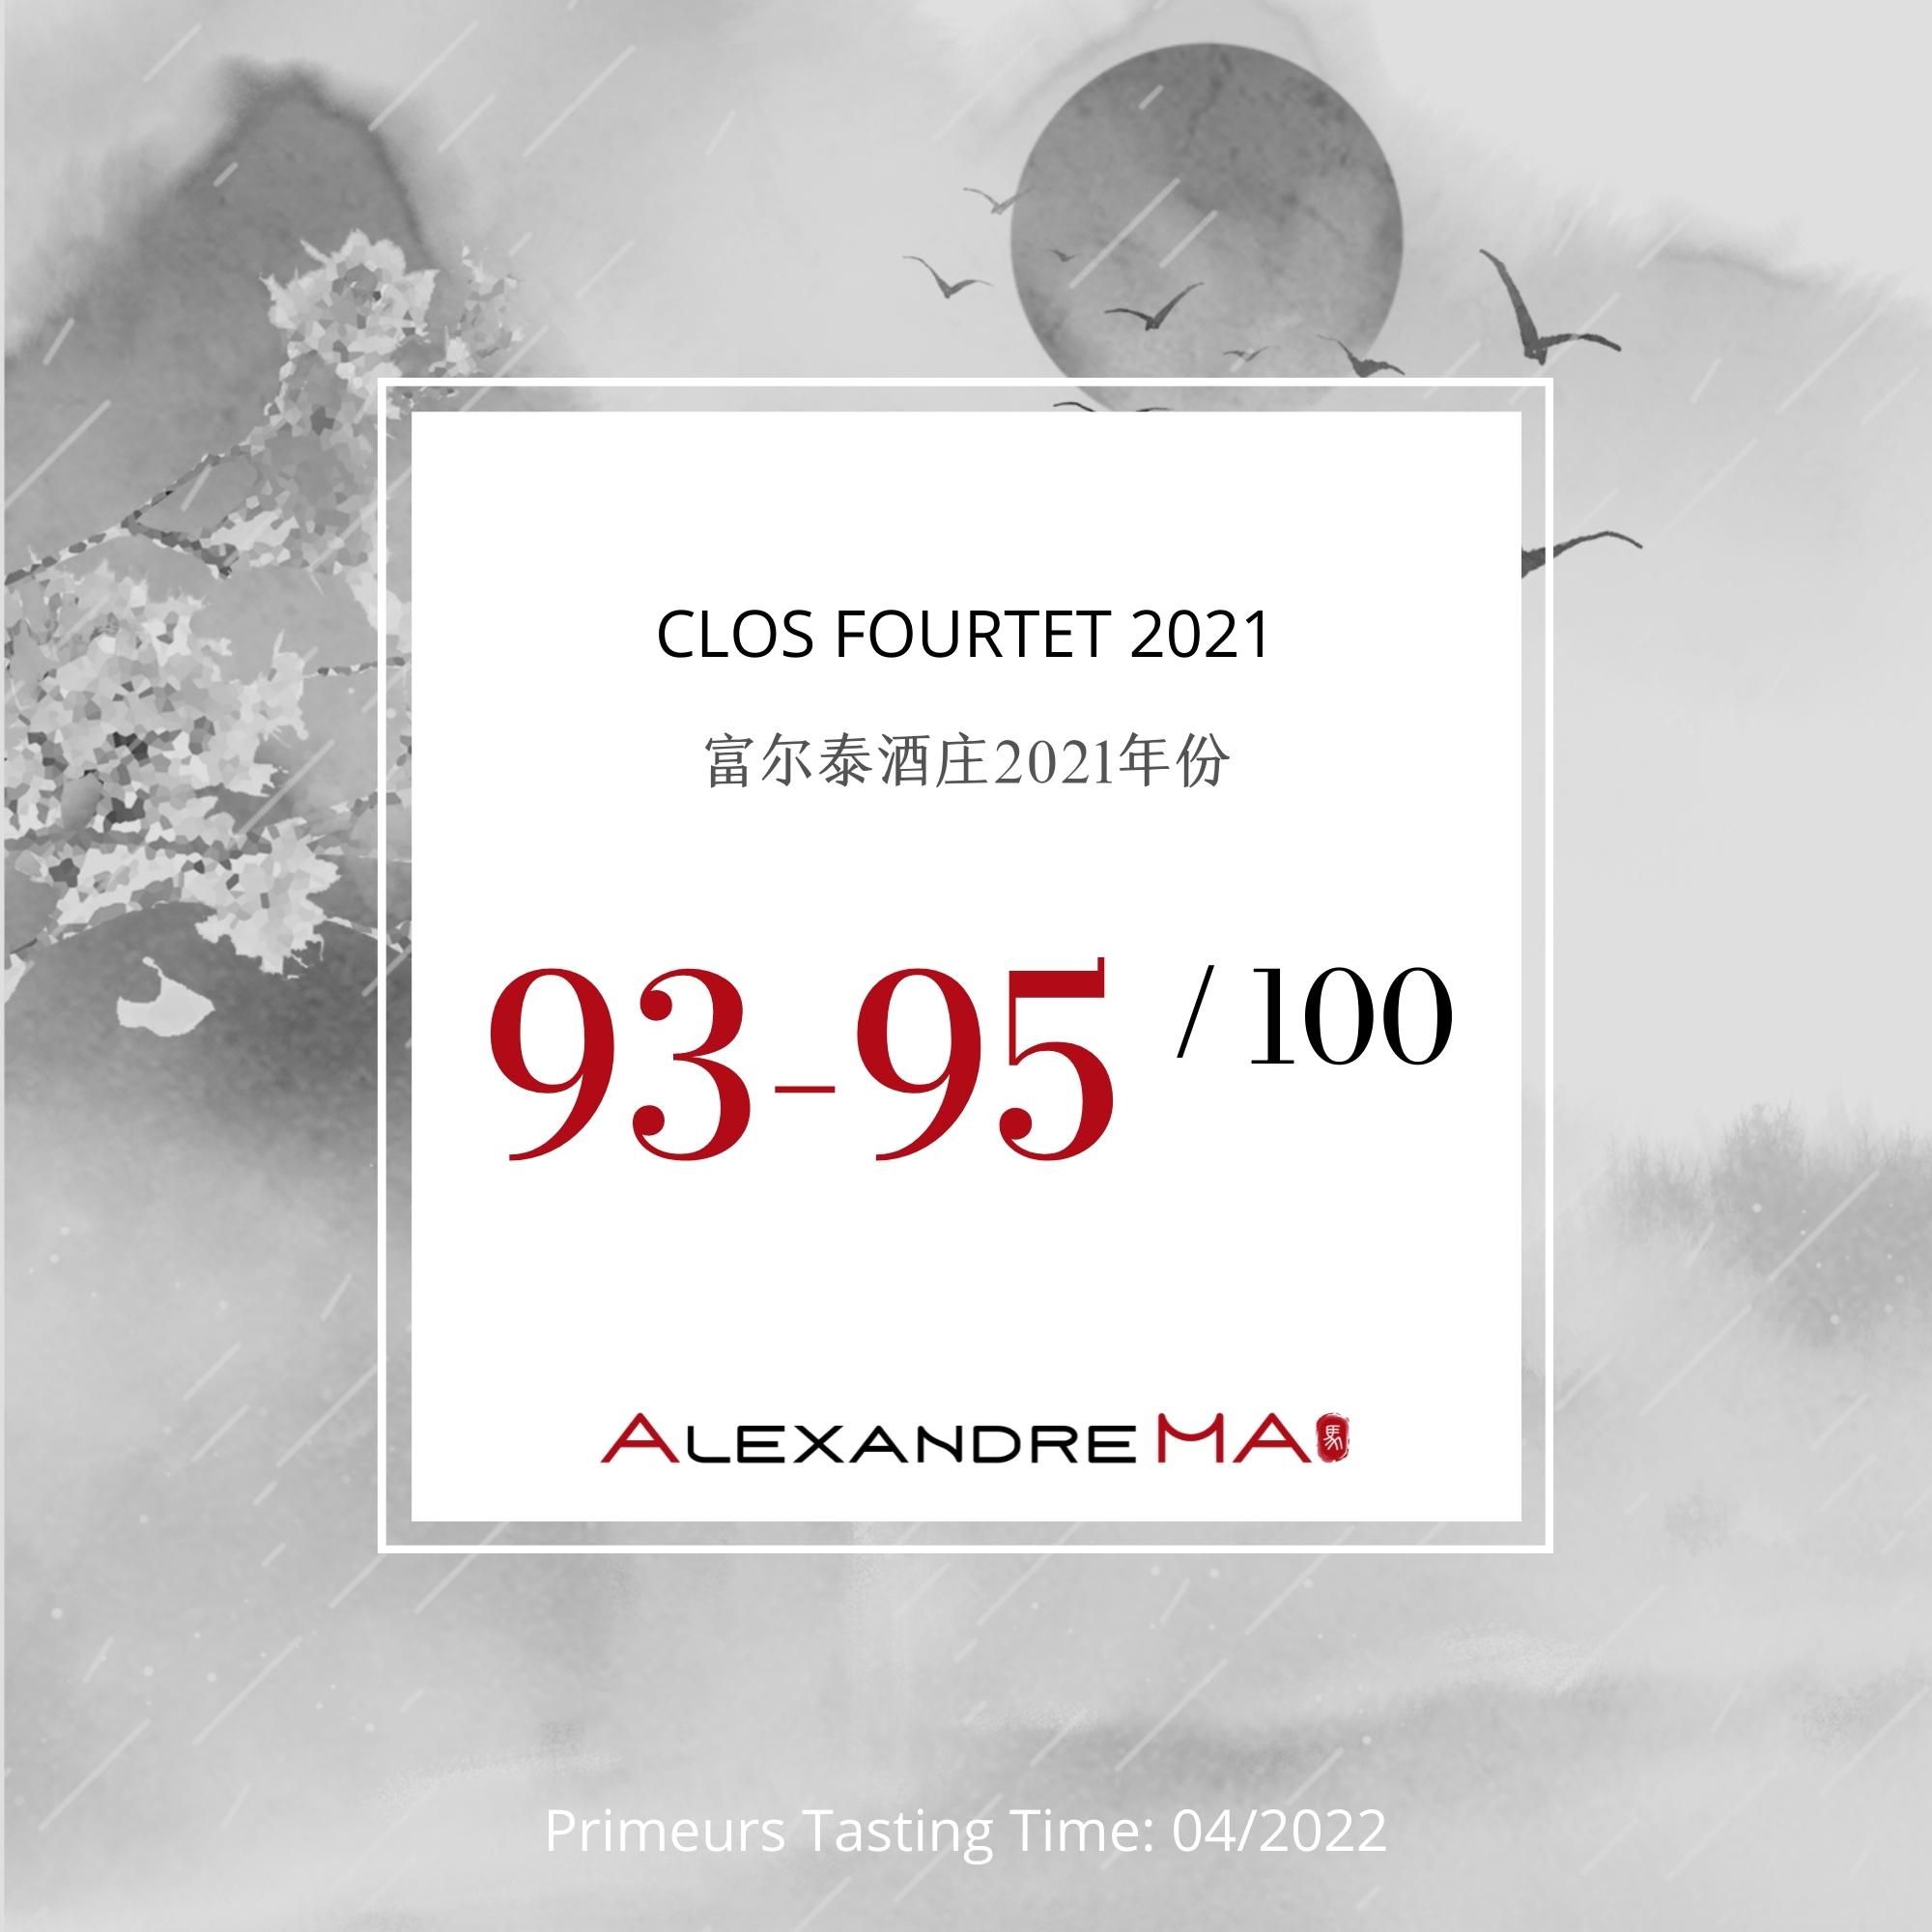 Clos Fourtet 2021 富尔泰酒庄 - Alexandre Ma